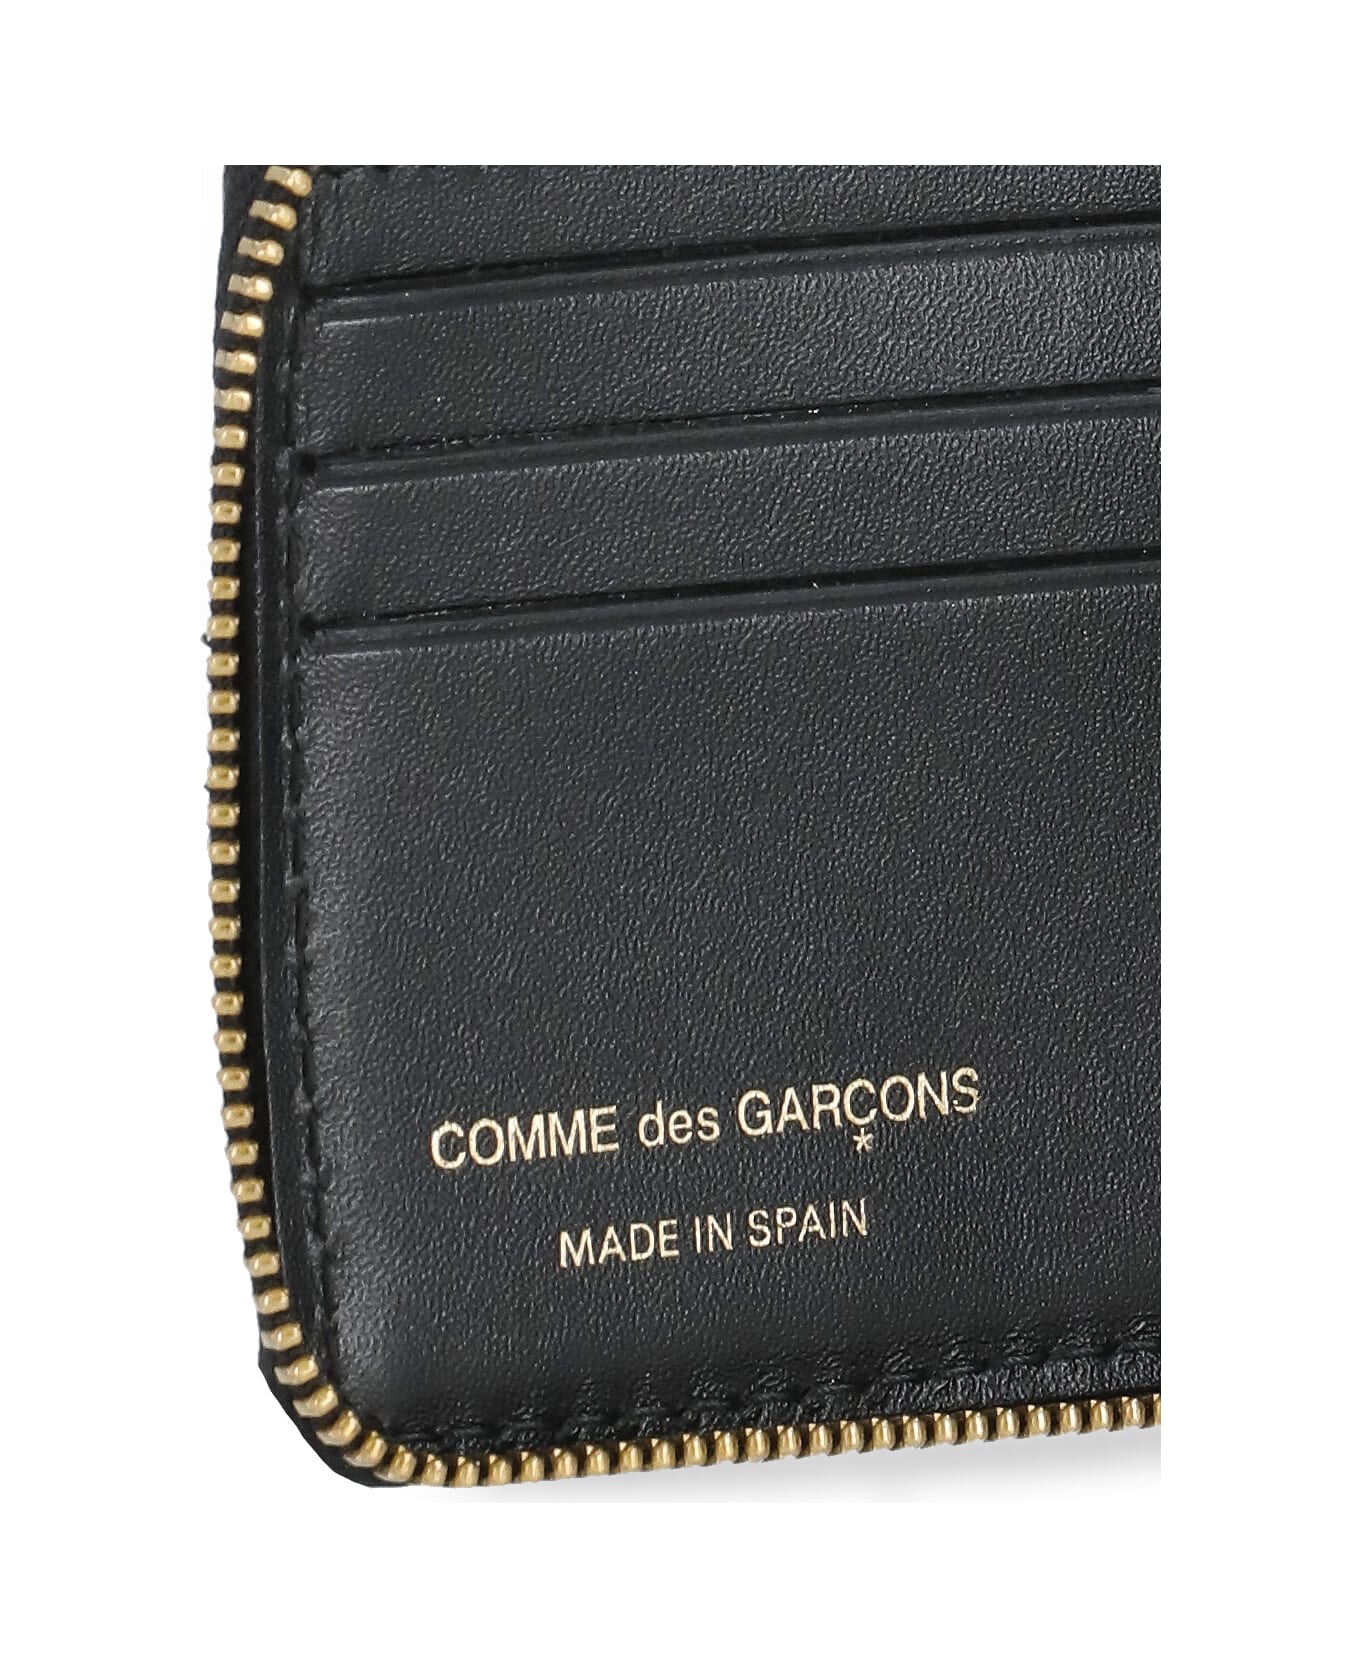 Comme des Garçons Wallet Wallet With A Tartan Pattern Wallet - RED/GREEN